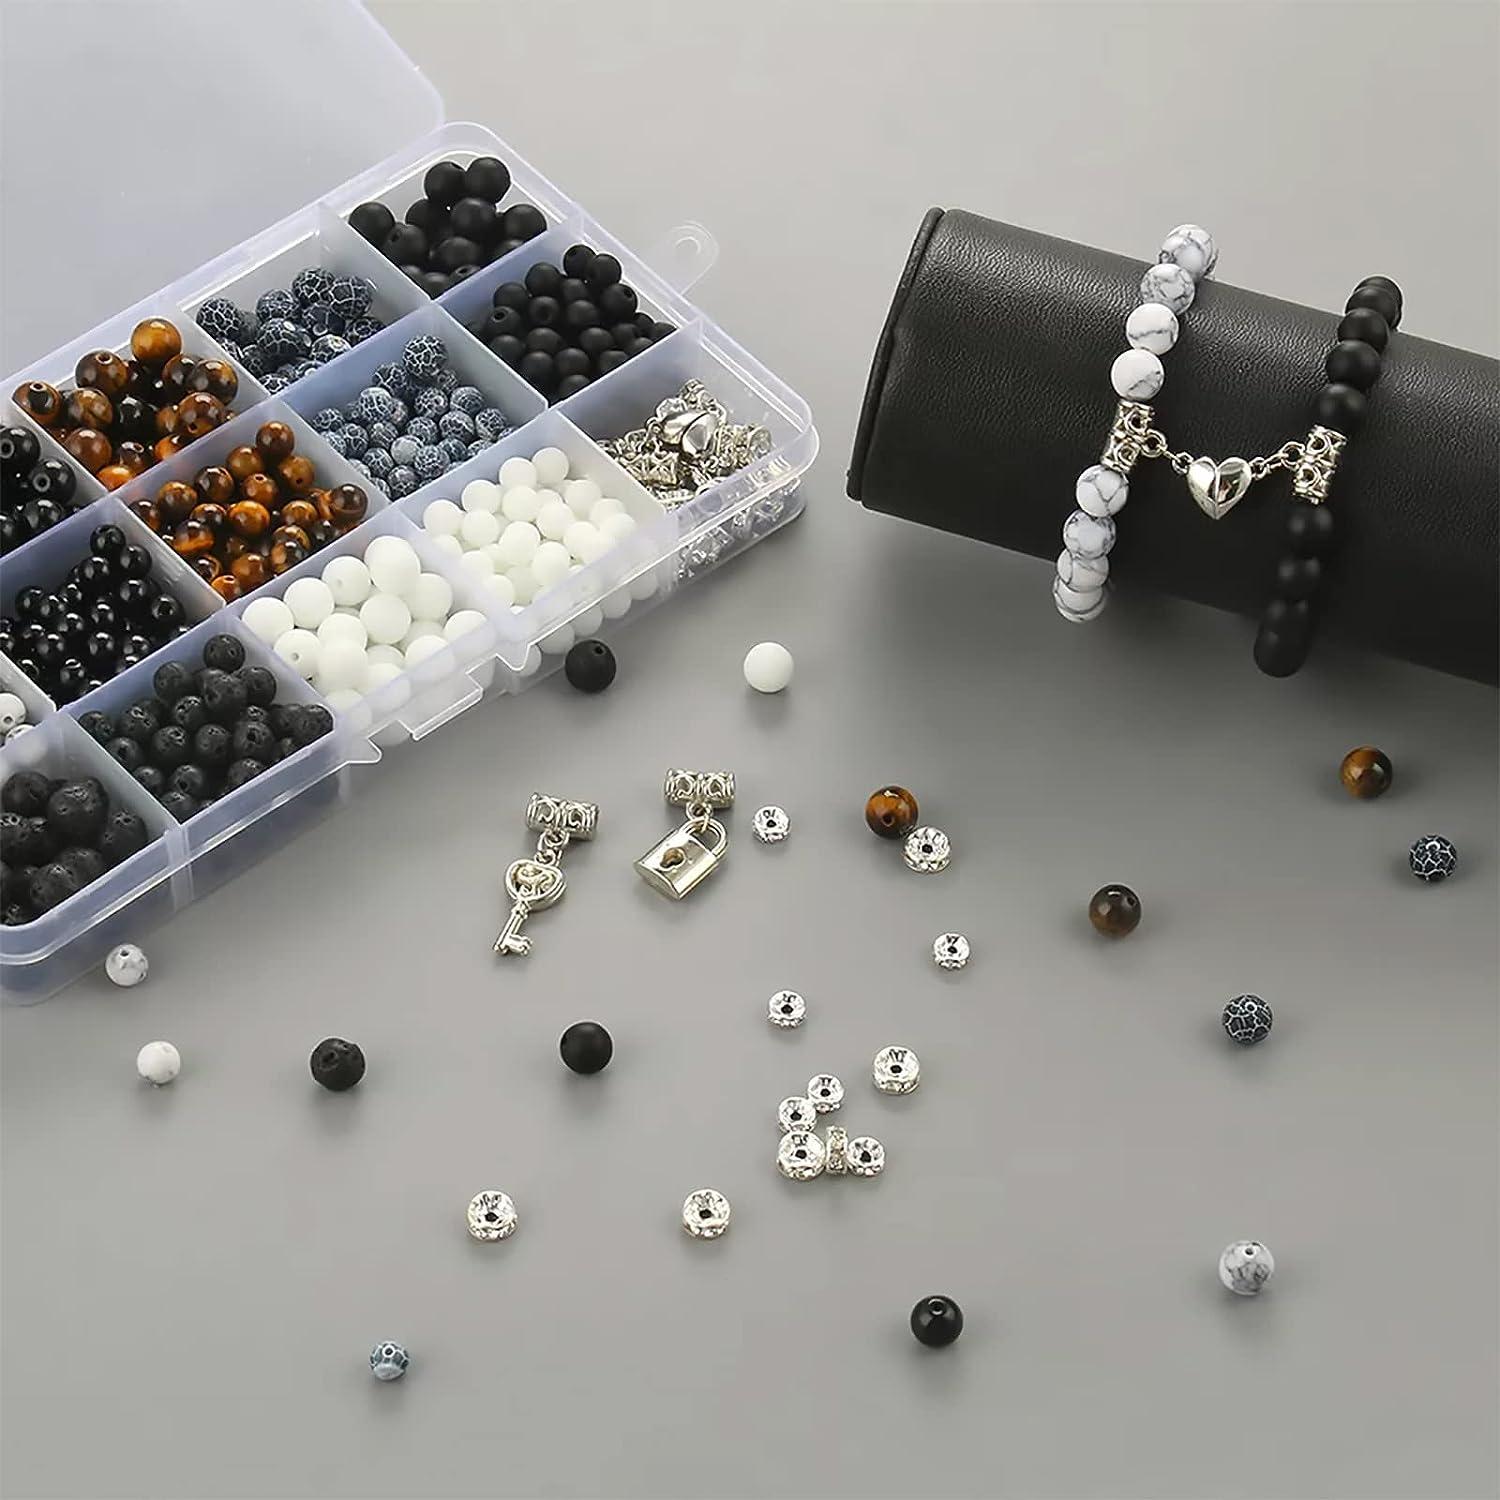 Beaded Bracelet Kit - Silver. Jewellery Making Kit for adults.